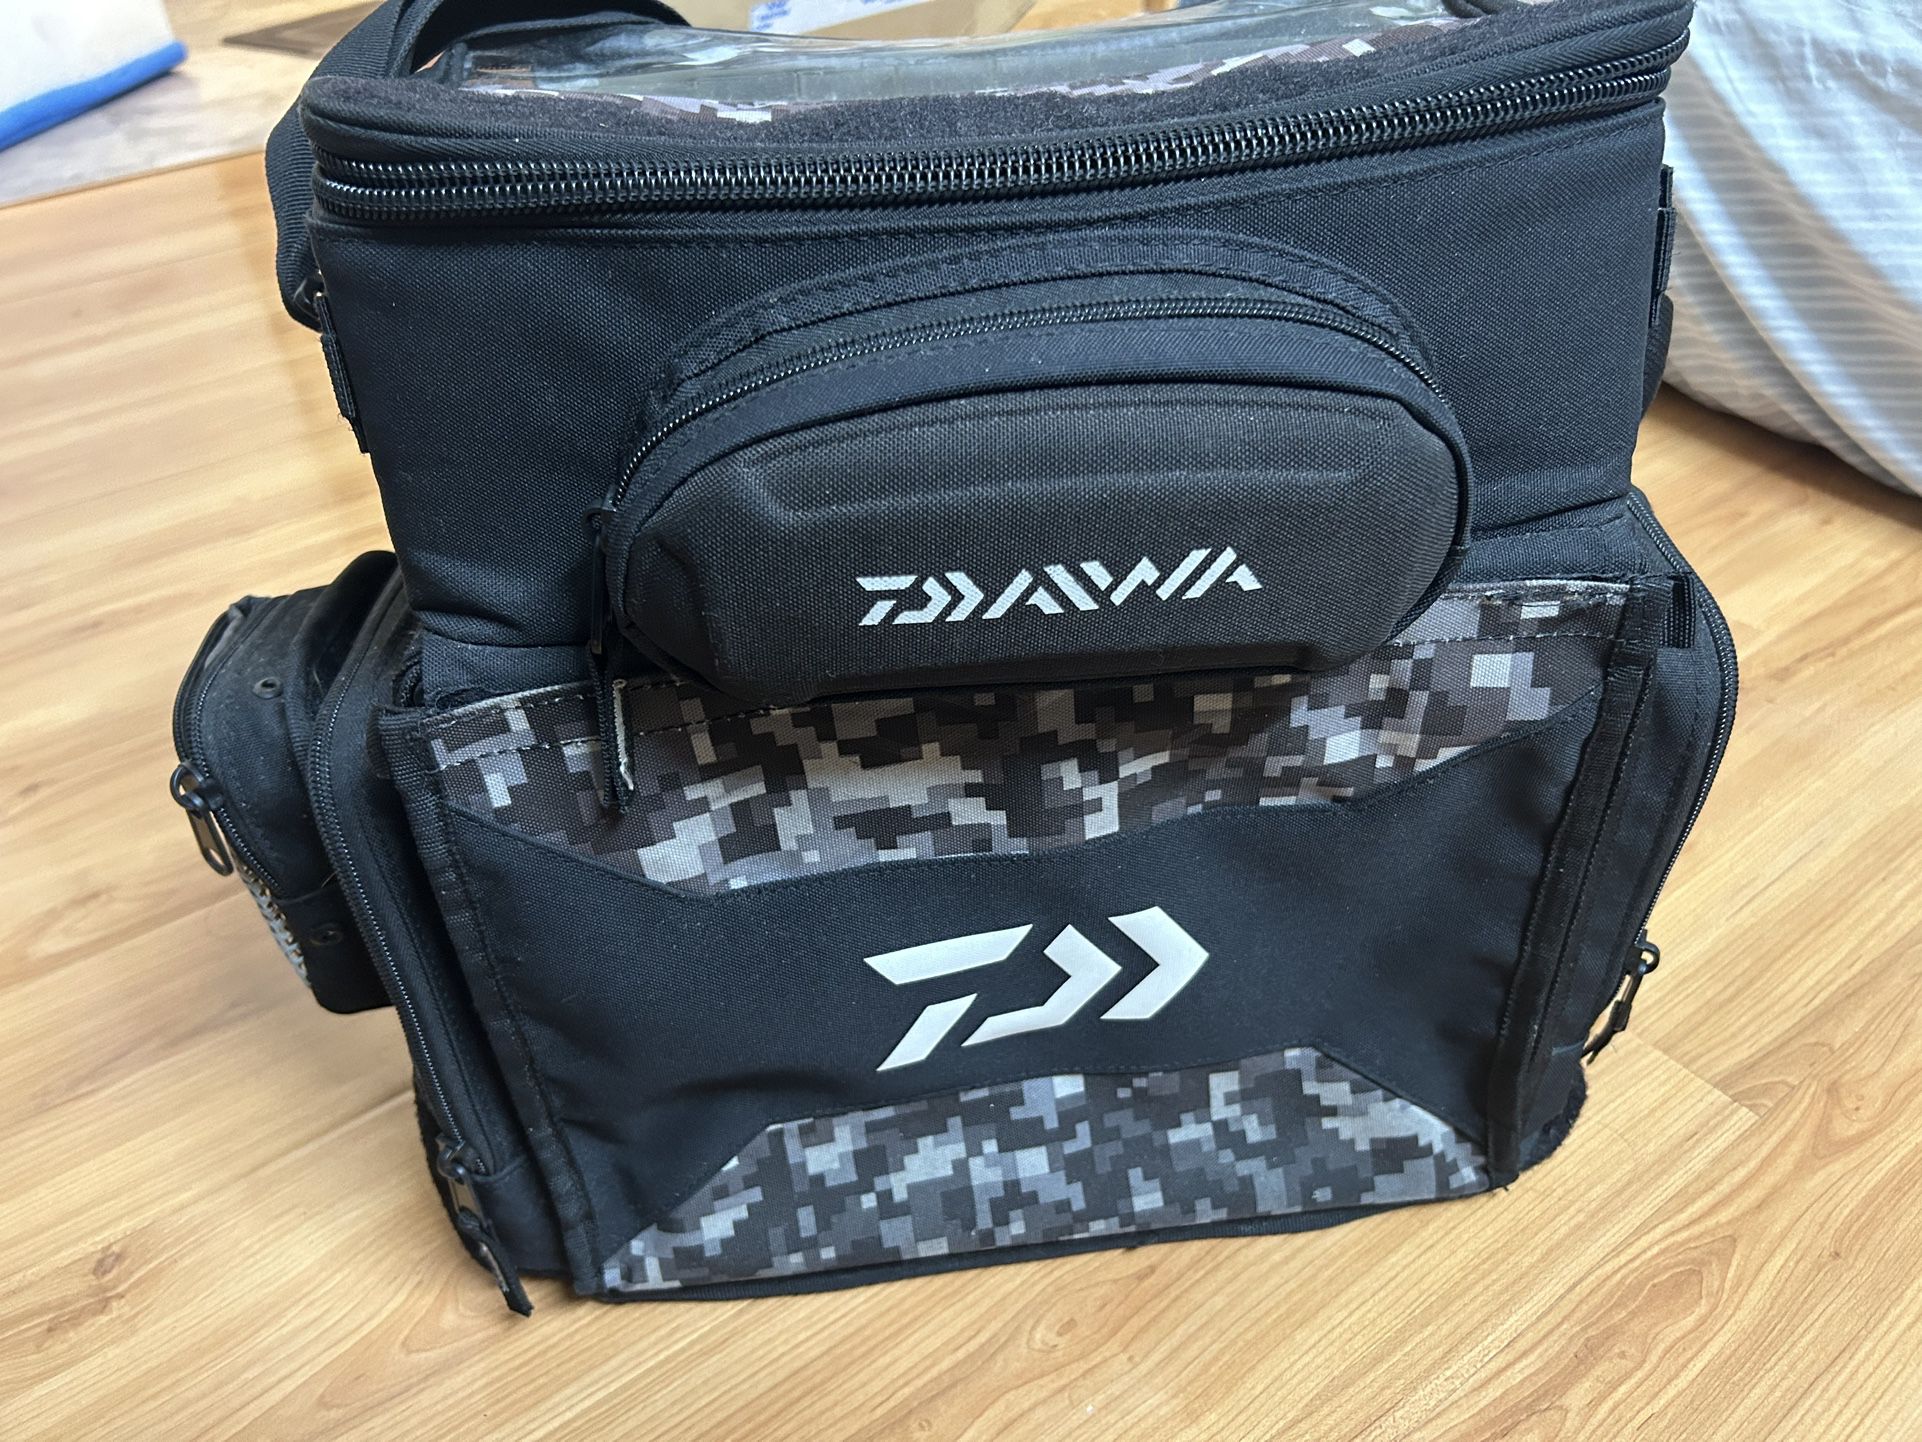 Daiwa Fishing Tackle Bag $100